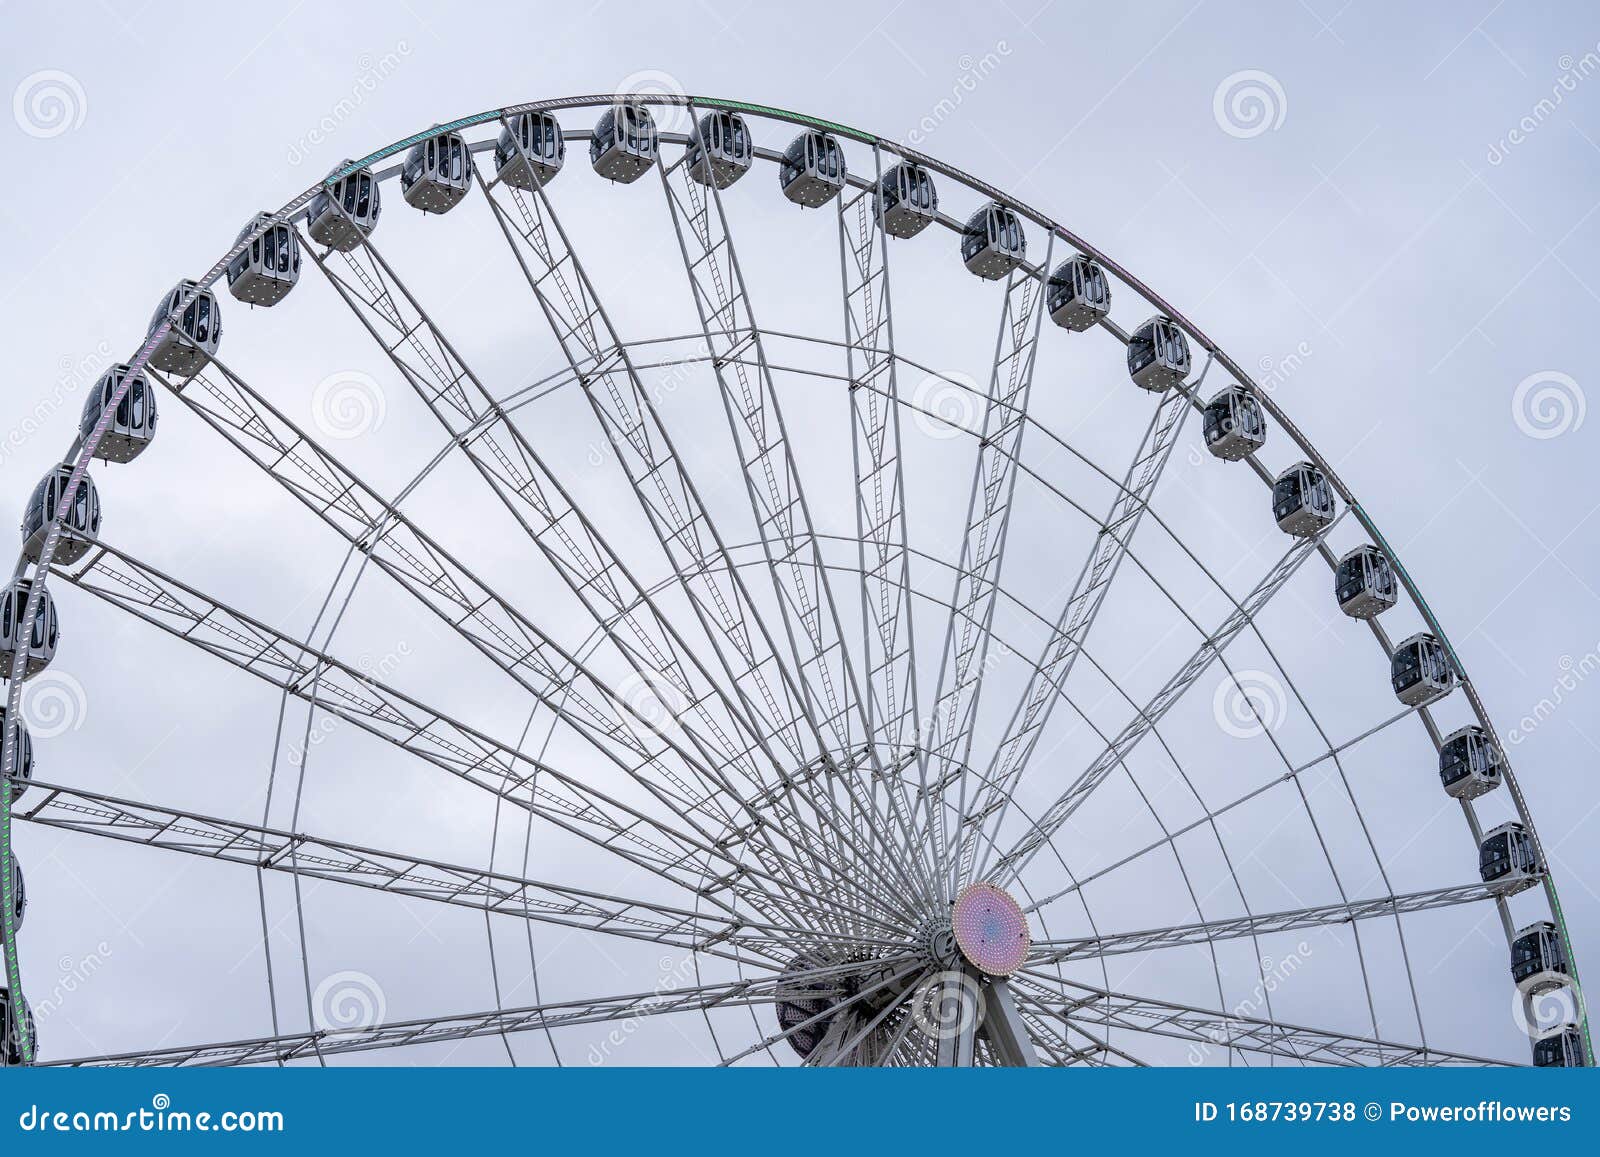 the tallest transportable wheel in the world.hyde park winter wonderland